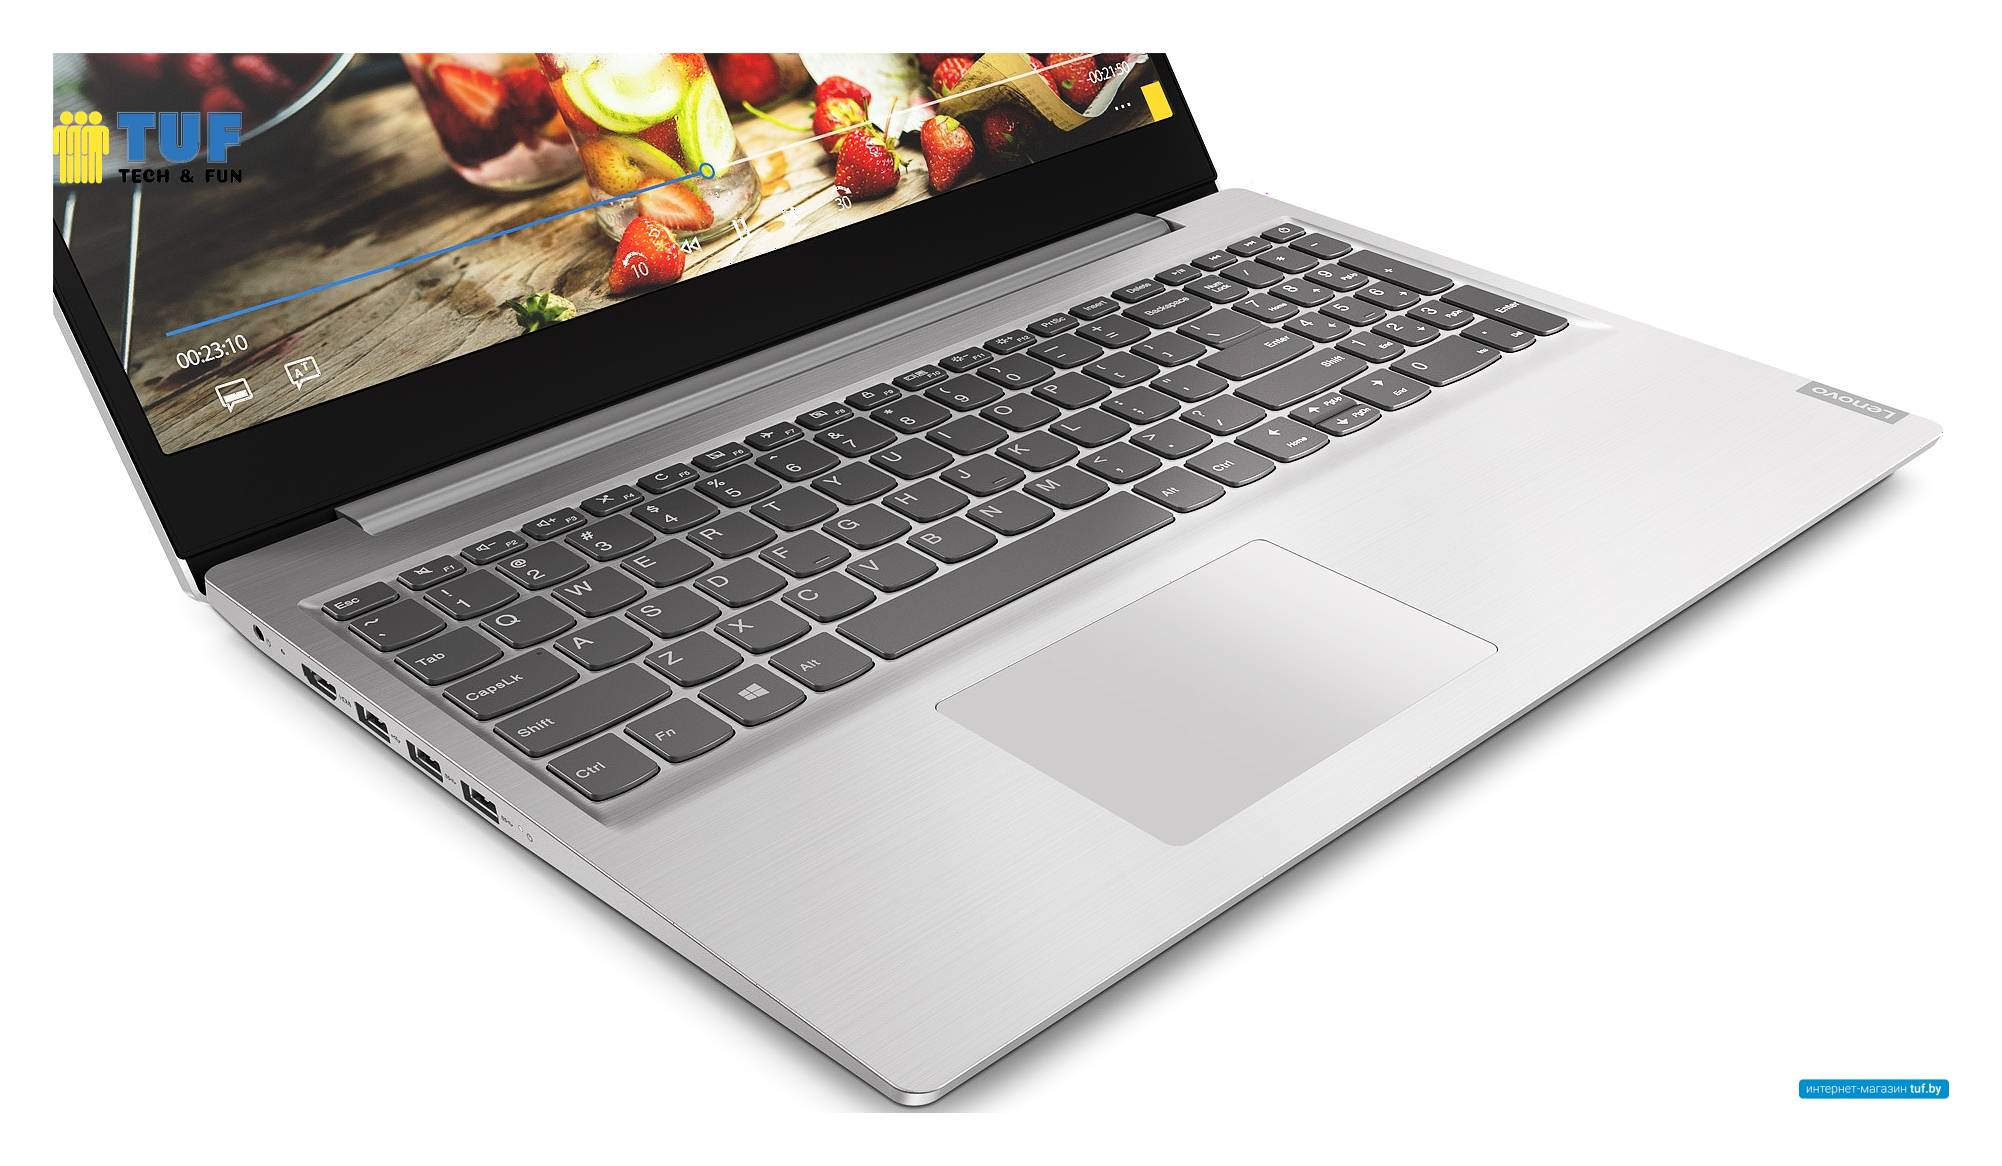 Ноутбук Lenovo IdeaPad S145-15IIL 81W800ASRK